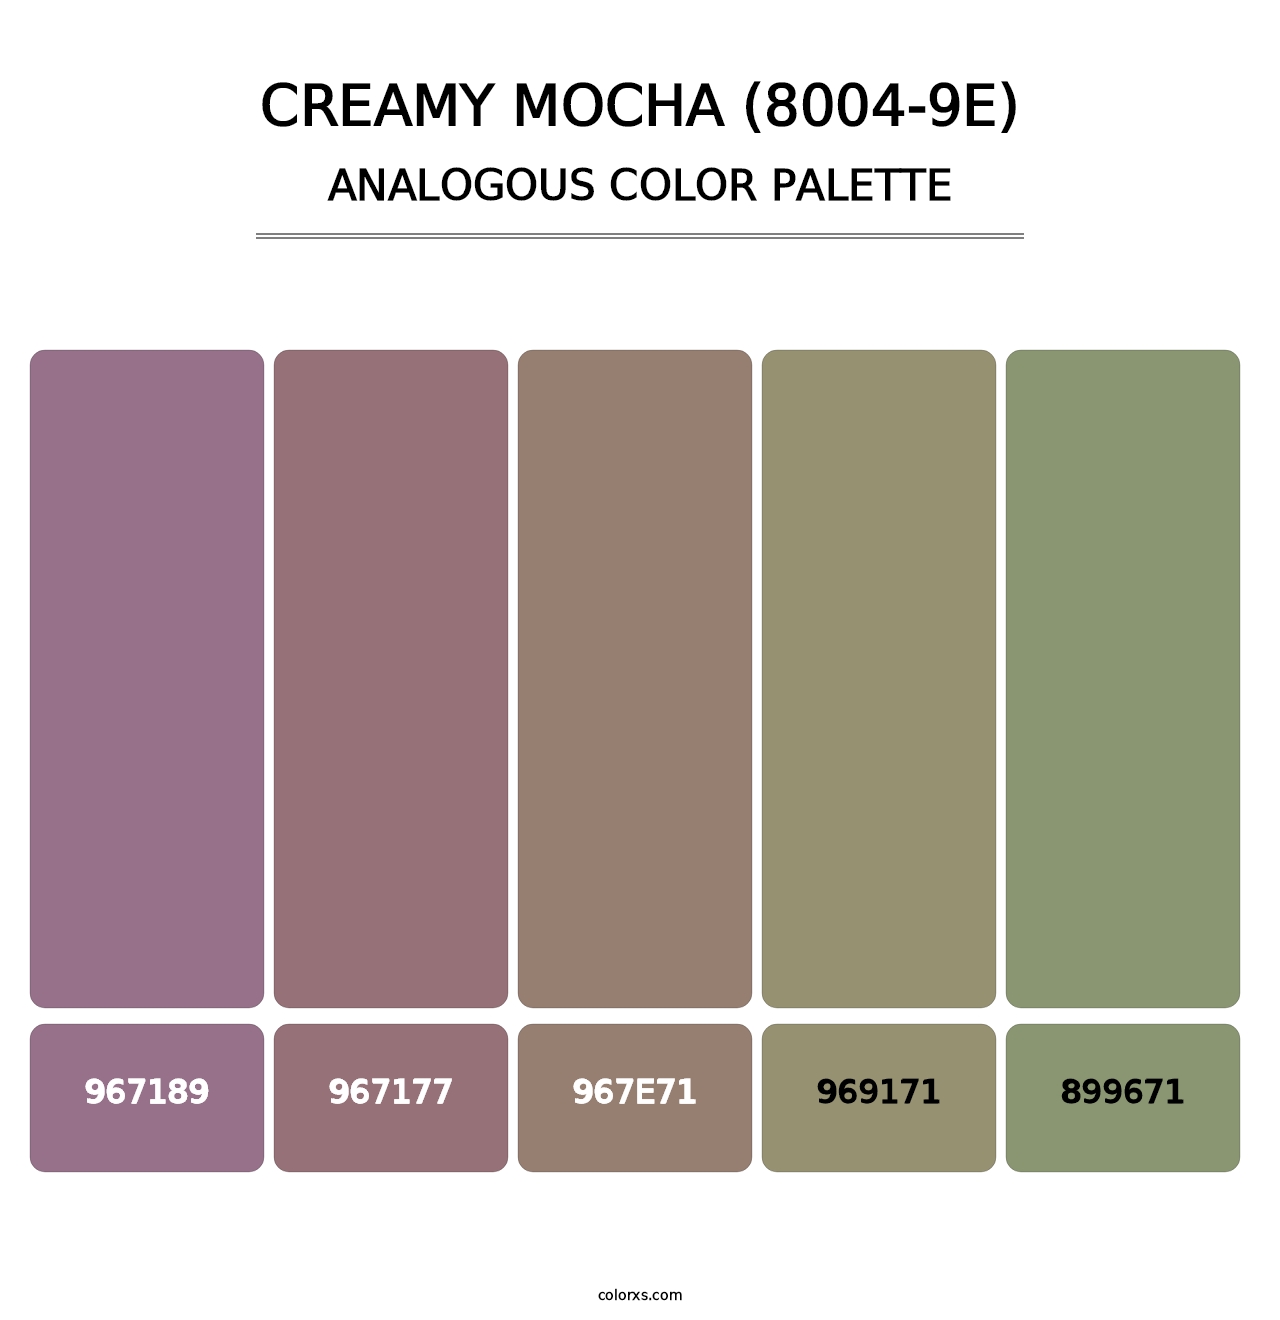 Creamy Mocha (8004-9E) - Analogous Color Palette